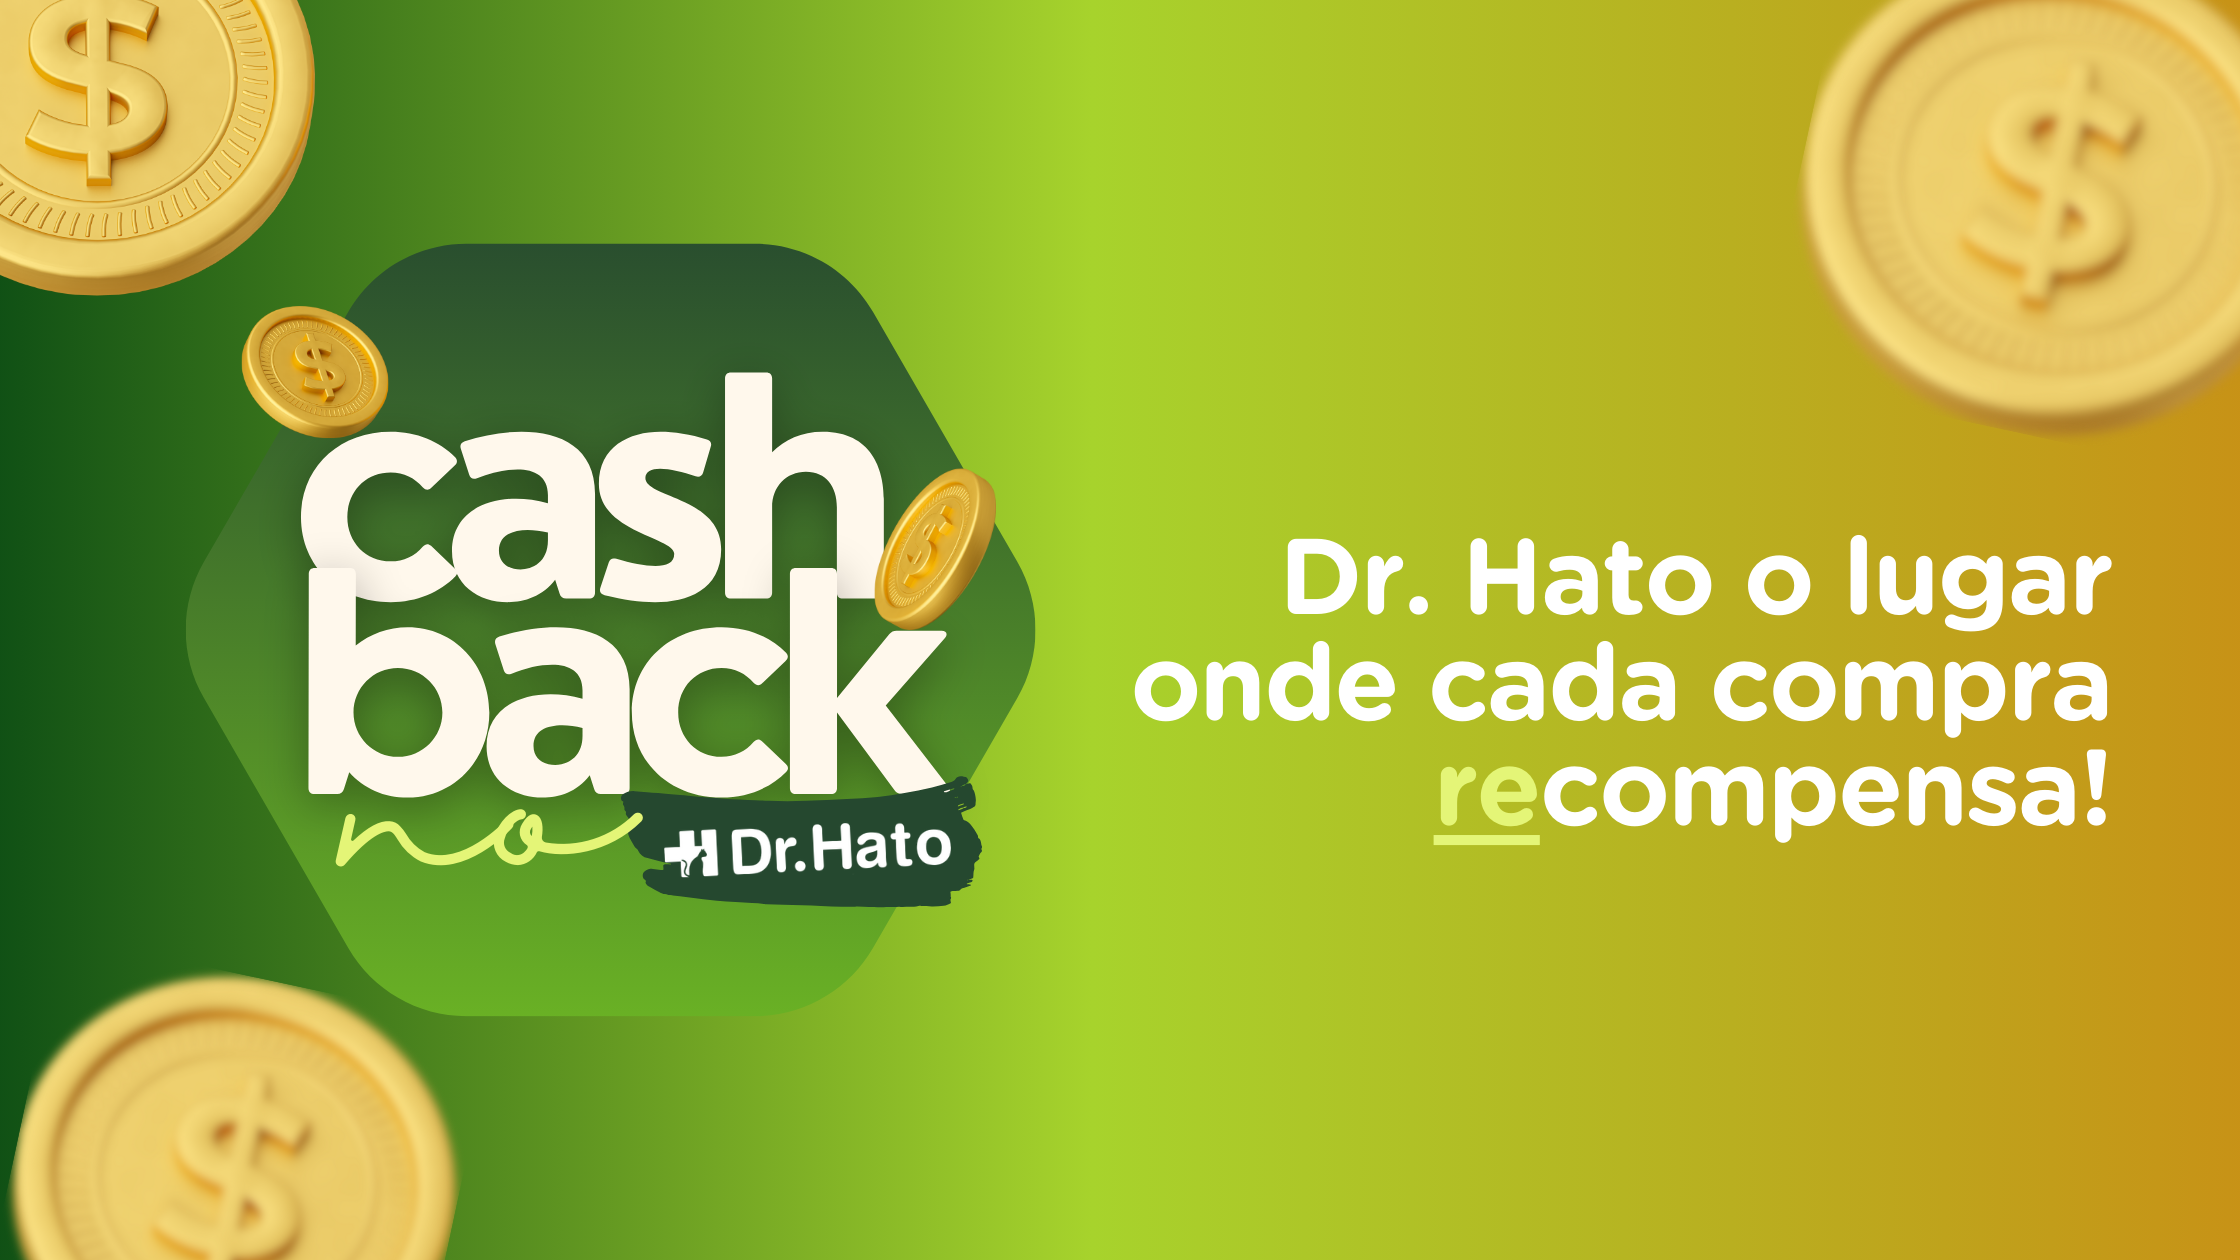 drh blog 2240 x 1260 - O Cashback no Dr. Hato!